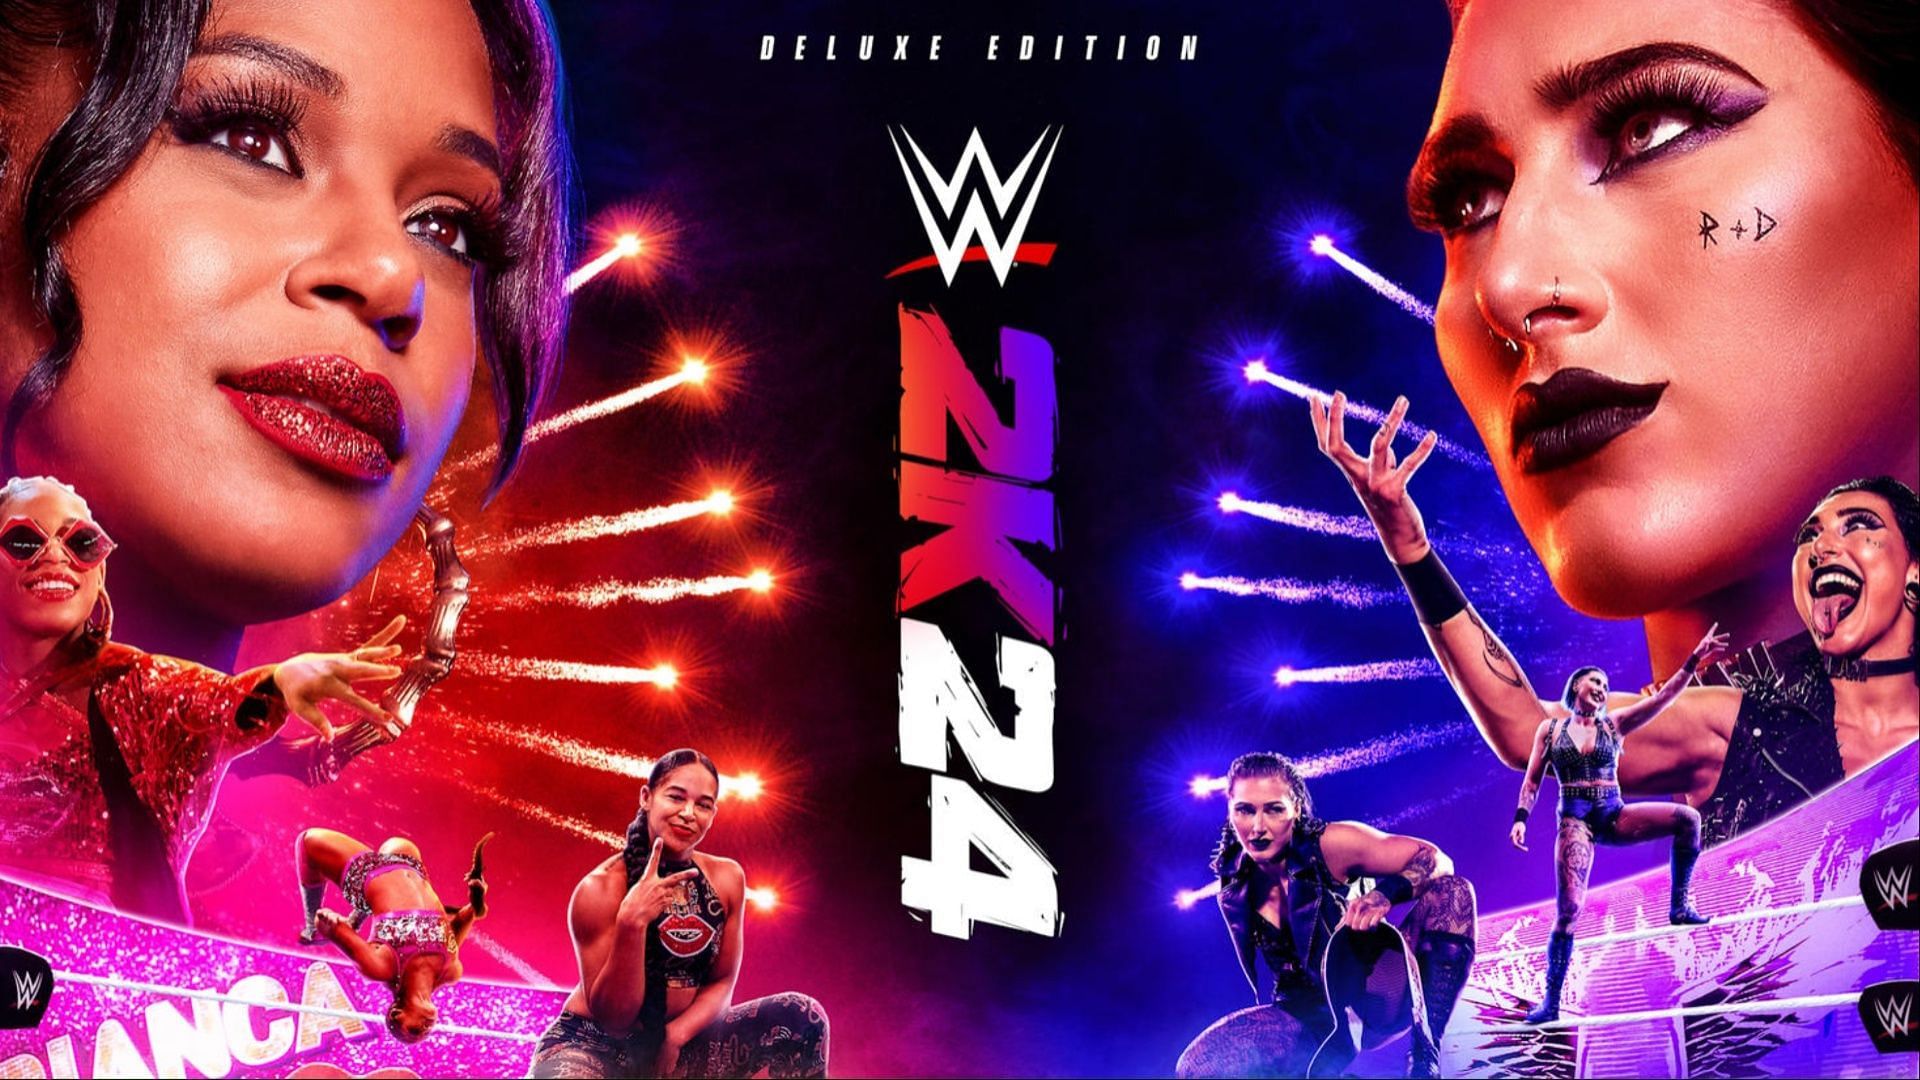 Bianca Belair and Rhea Ripley cover art (Image via WWE)